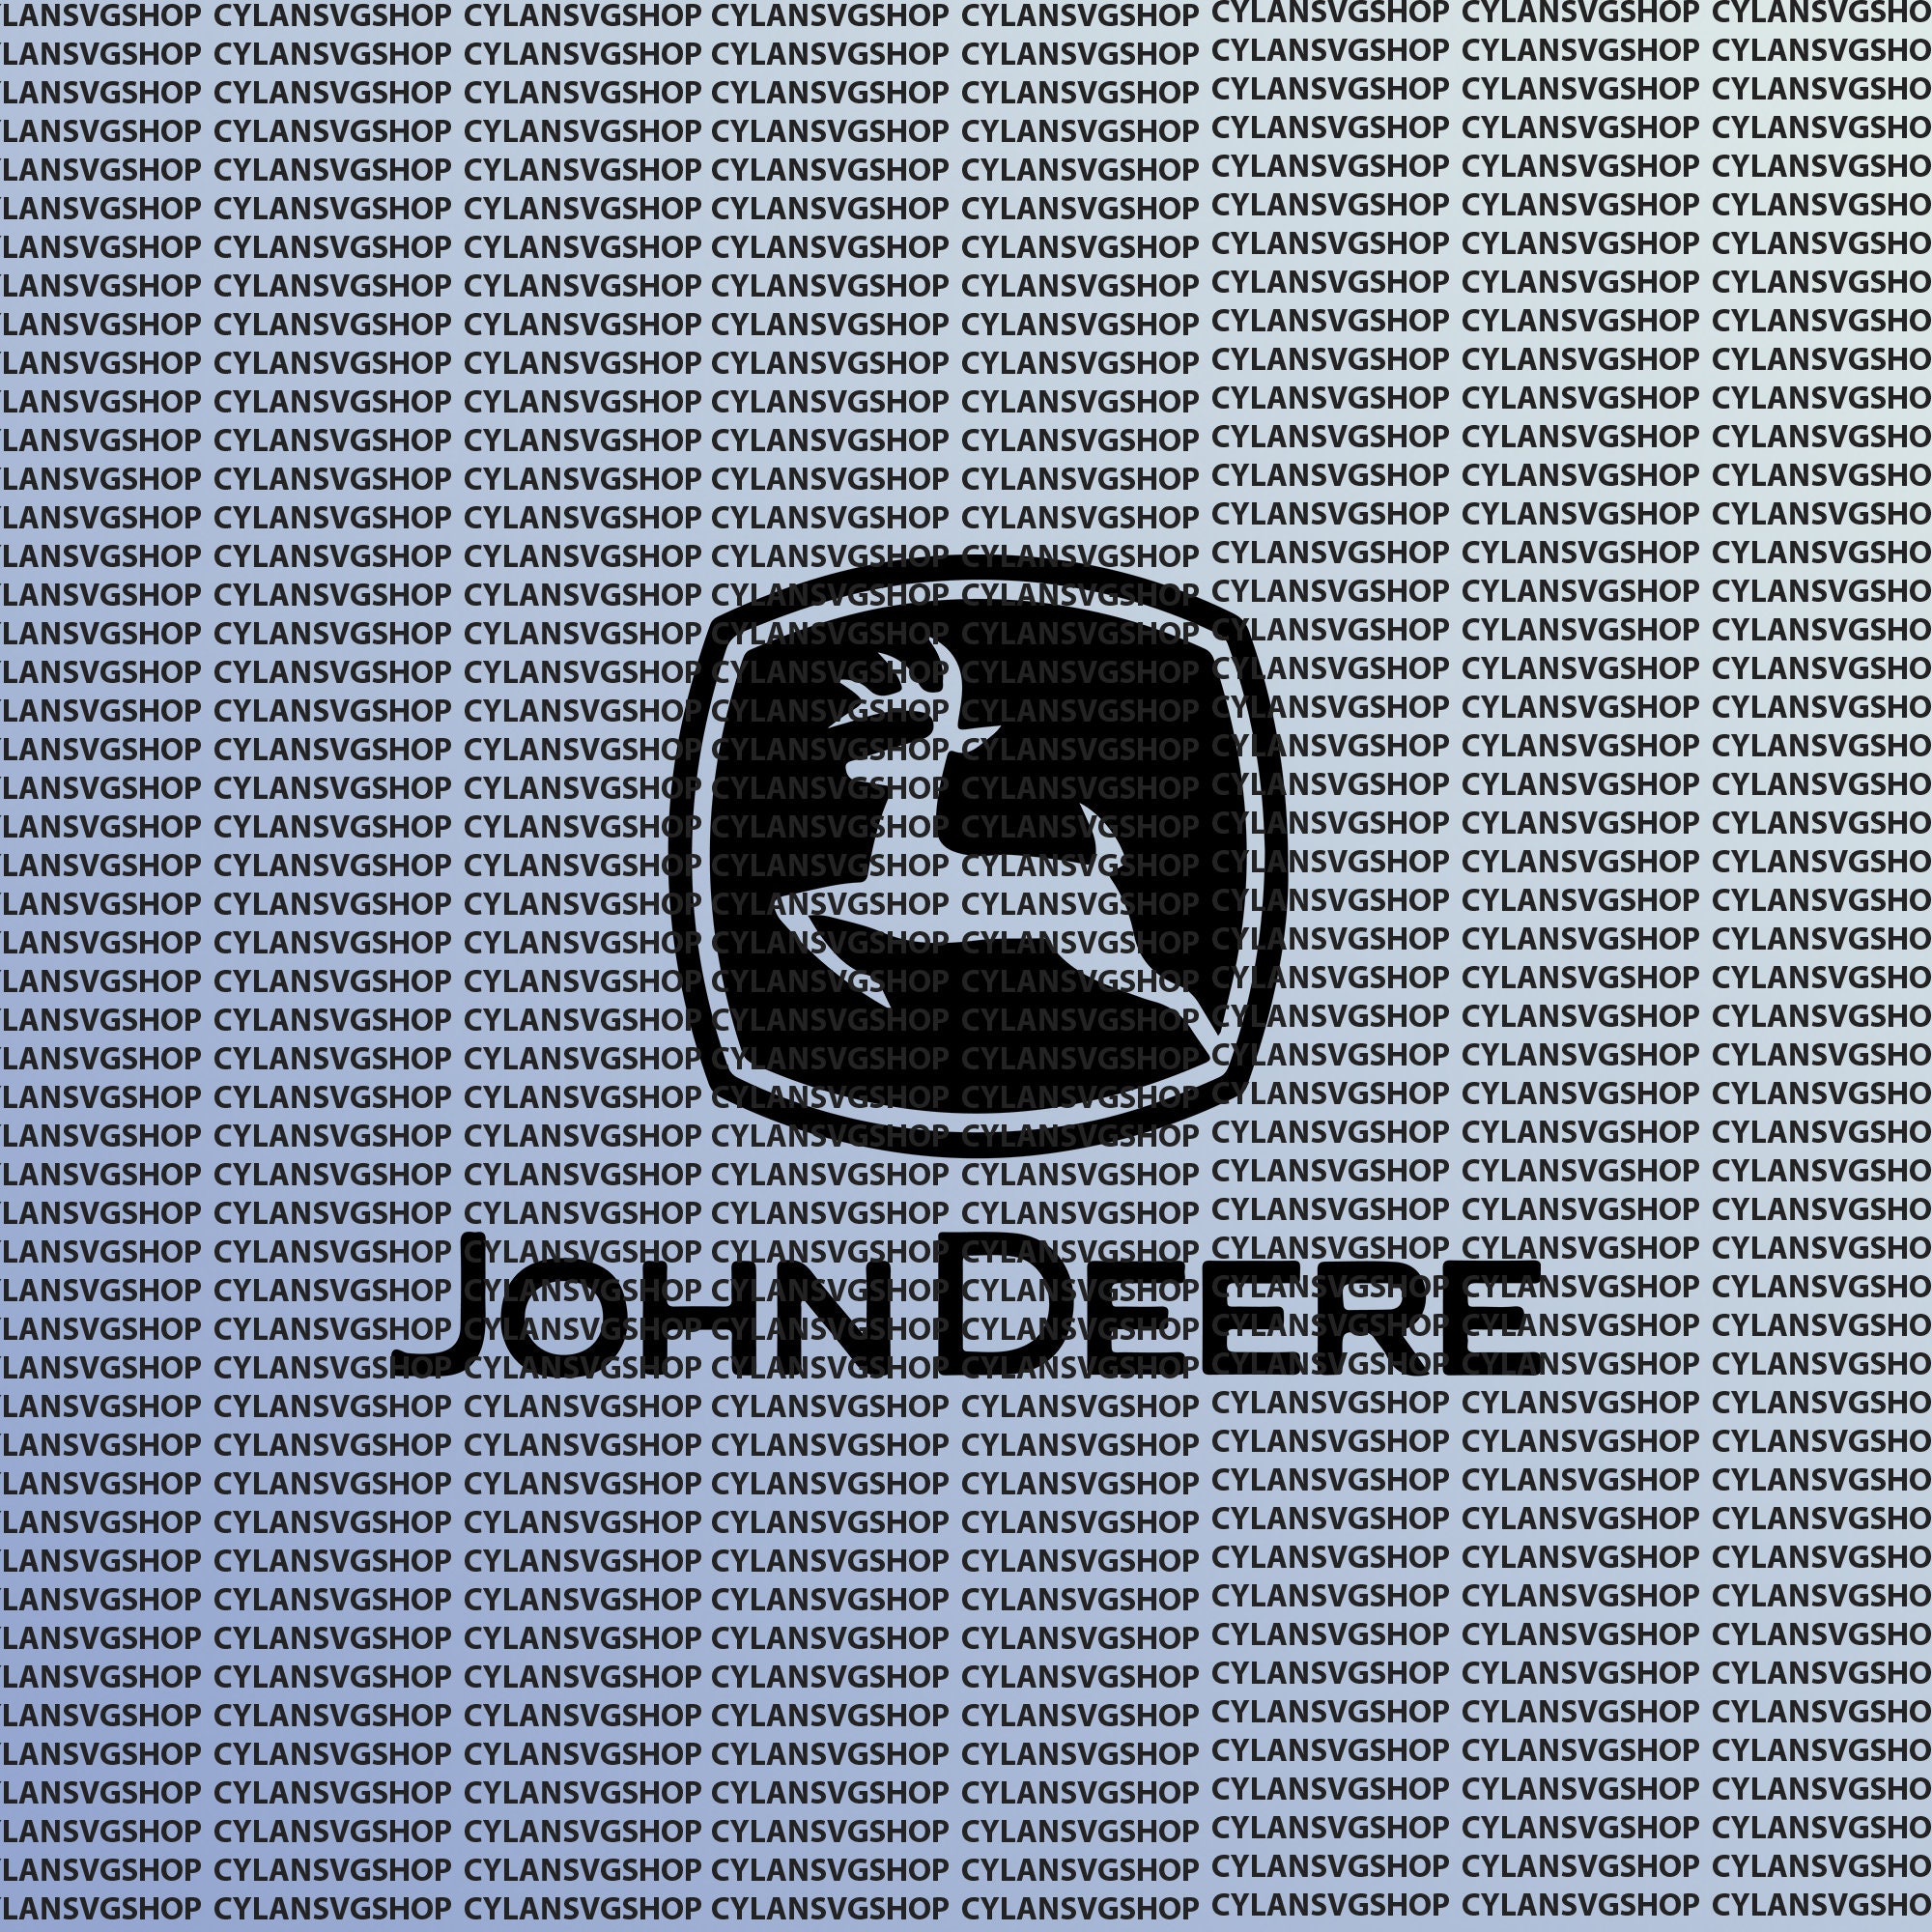 john deere logo wallpaper for iphone